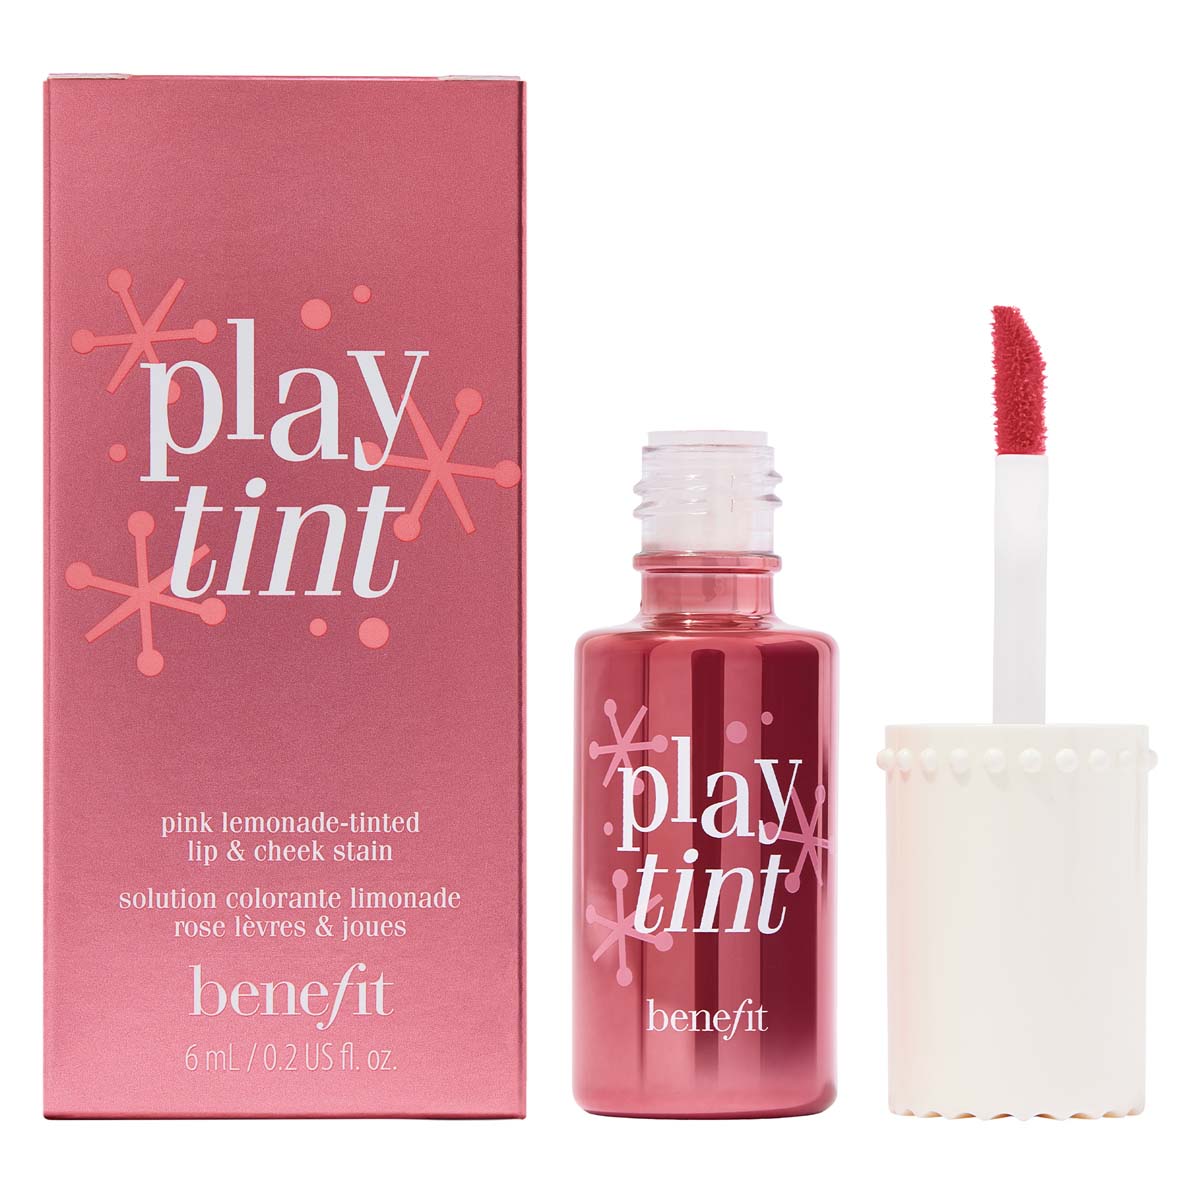 Benefit Playtint Pink-Lemonade Lip & Cheek Stain 6ml